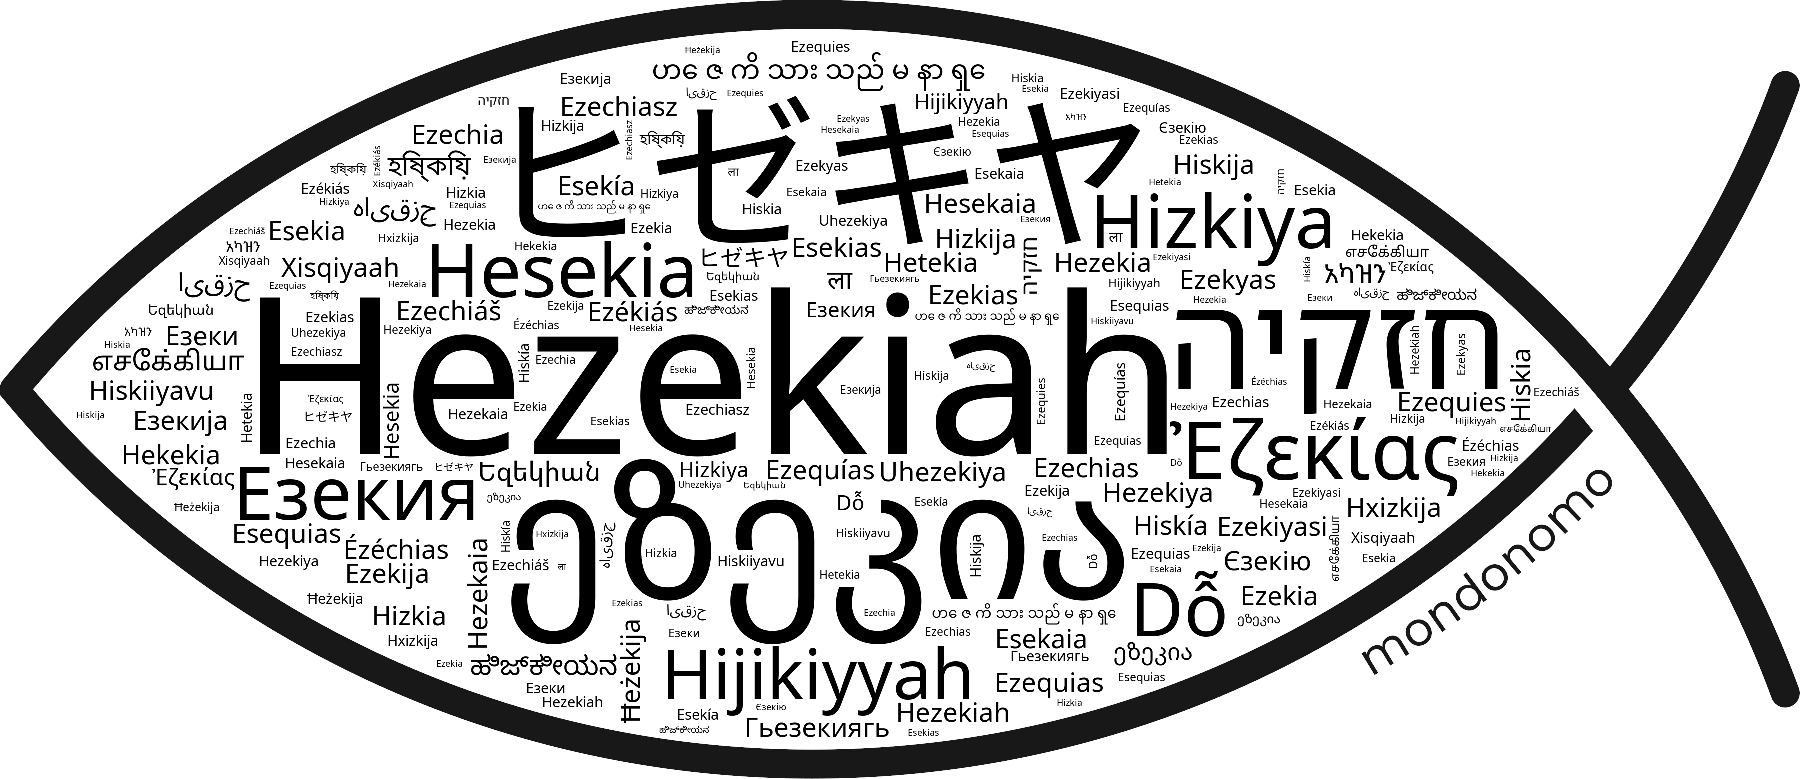 Name Hezekiah in the world's Bibles